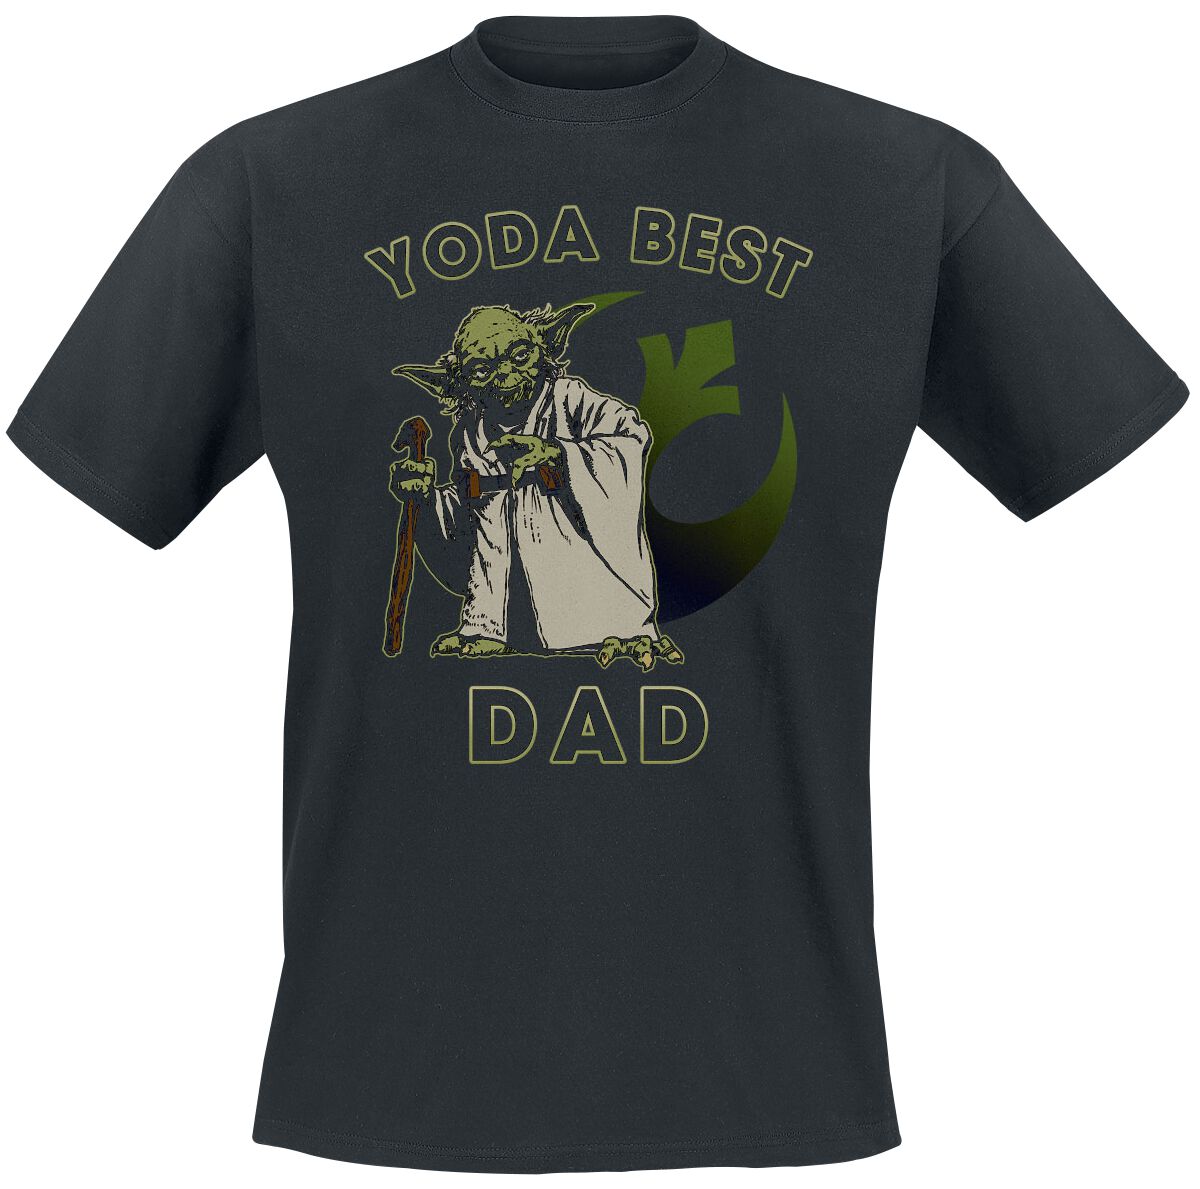 Star Wars Yoda Best Dad T-Shirt black